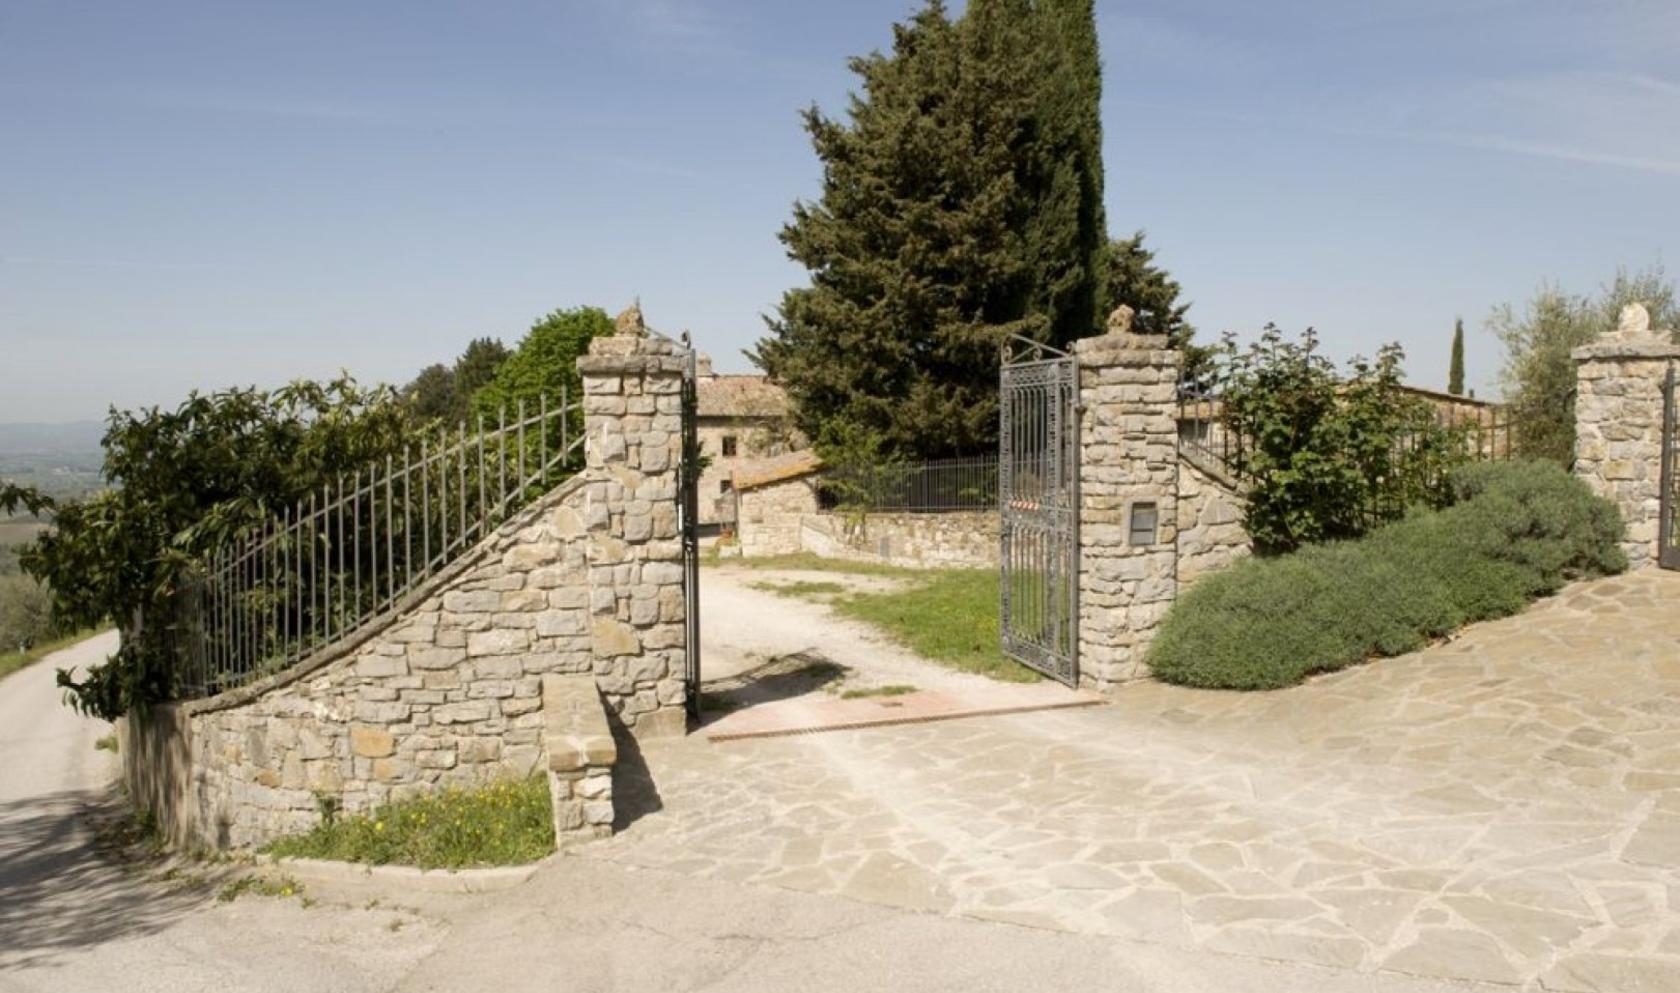 Toscana Immobiliare - For sale in Chianti area prestigious farm with excellent production of wine and oil